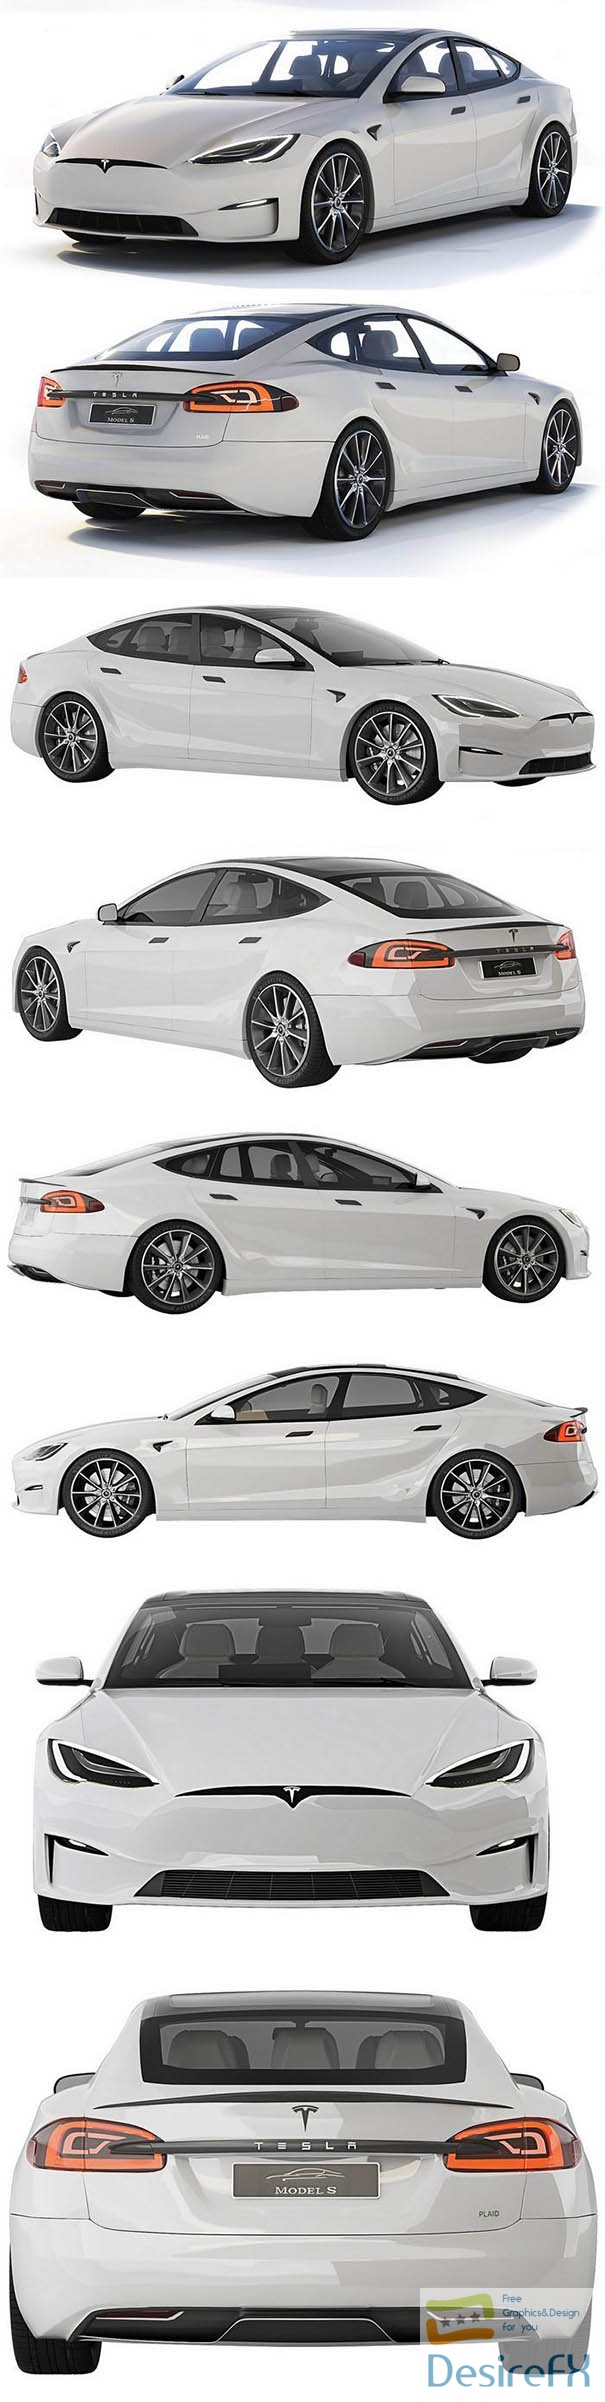 Tesla Model S Plaid 2021 3D Model